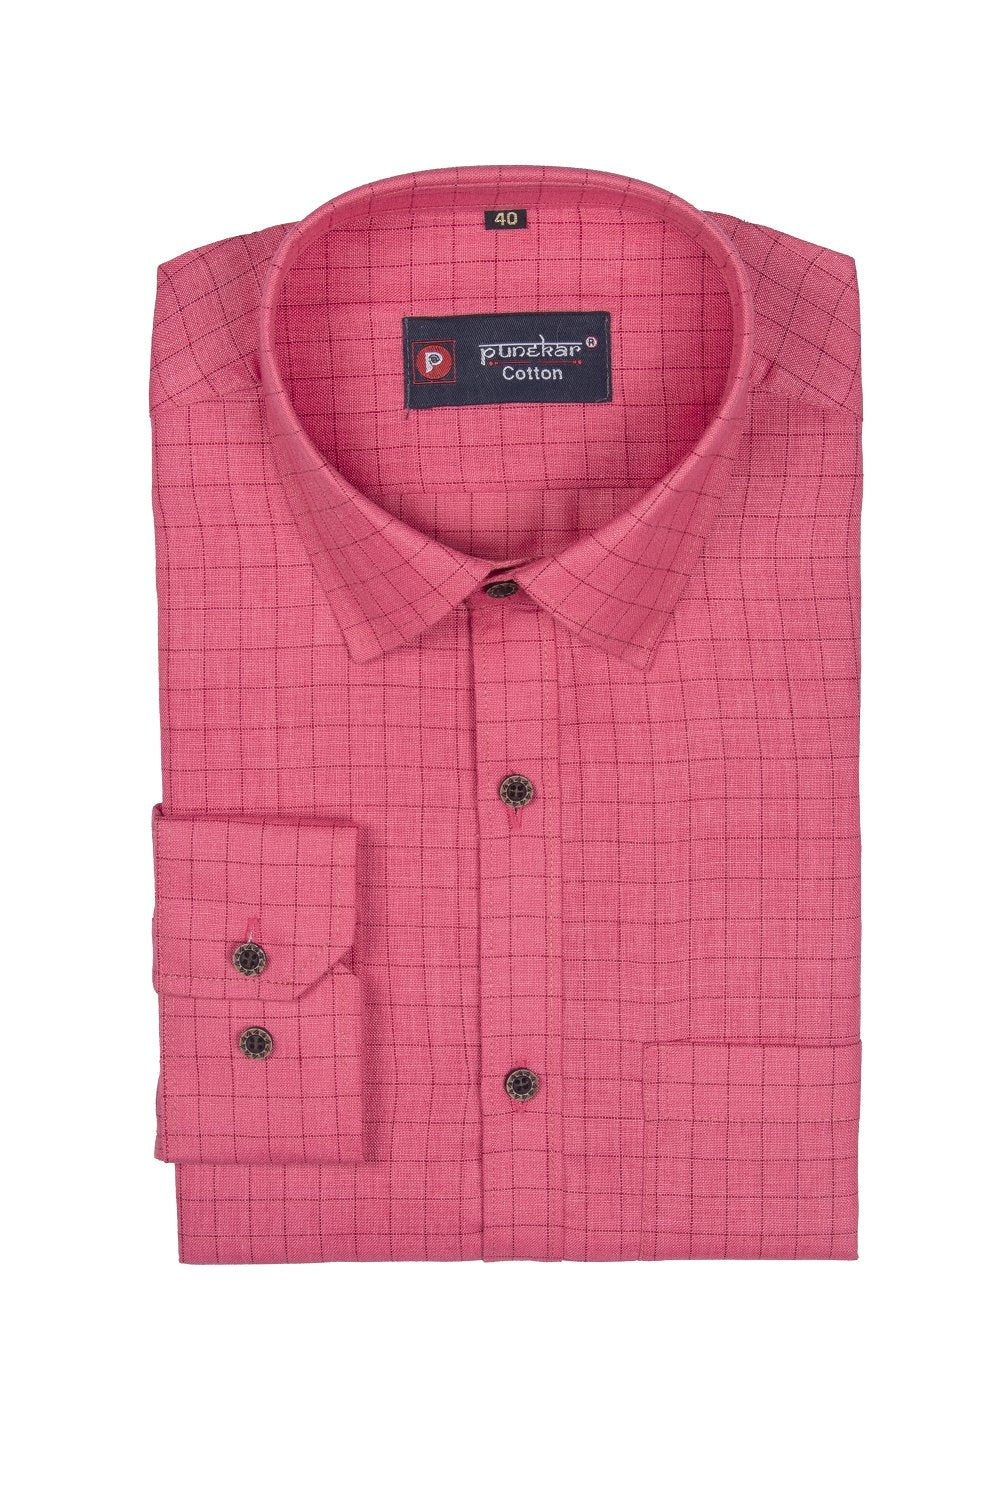 Punekar Cotton Multi Color Check Criss Cross Woven Cotton Shirt For Men's.,  Checkered shirt, Casual Check Shirt, Multi Color Check Shirts, पुरुषों की  चेक शर्ट - Punekar Cotton, Nagpur